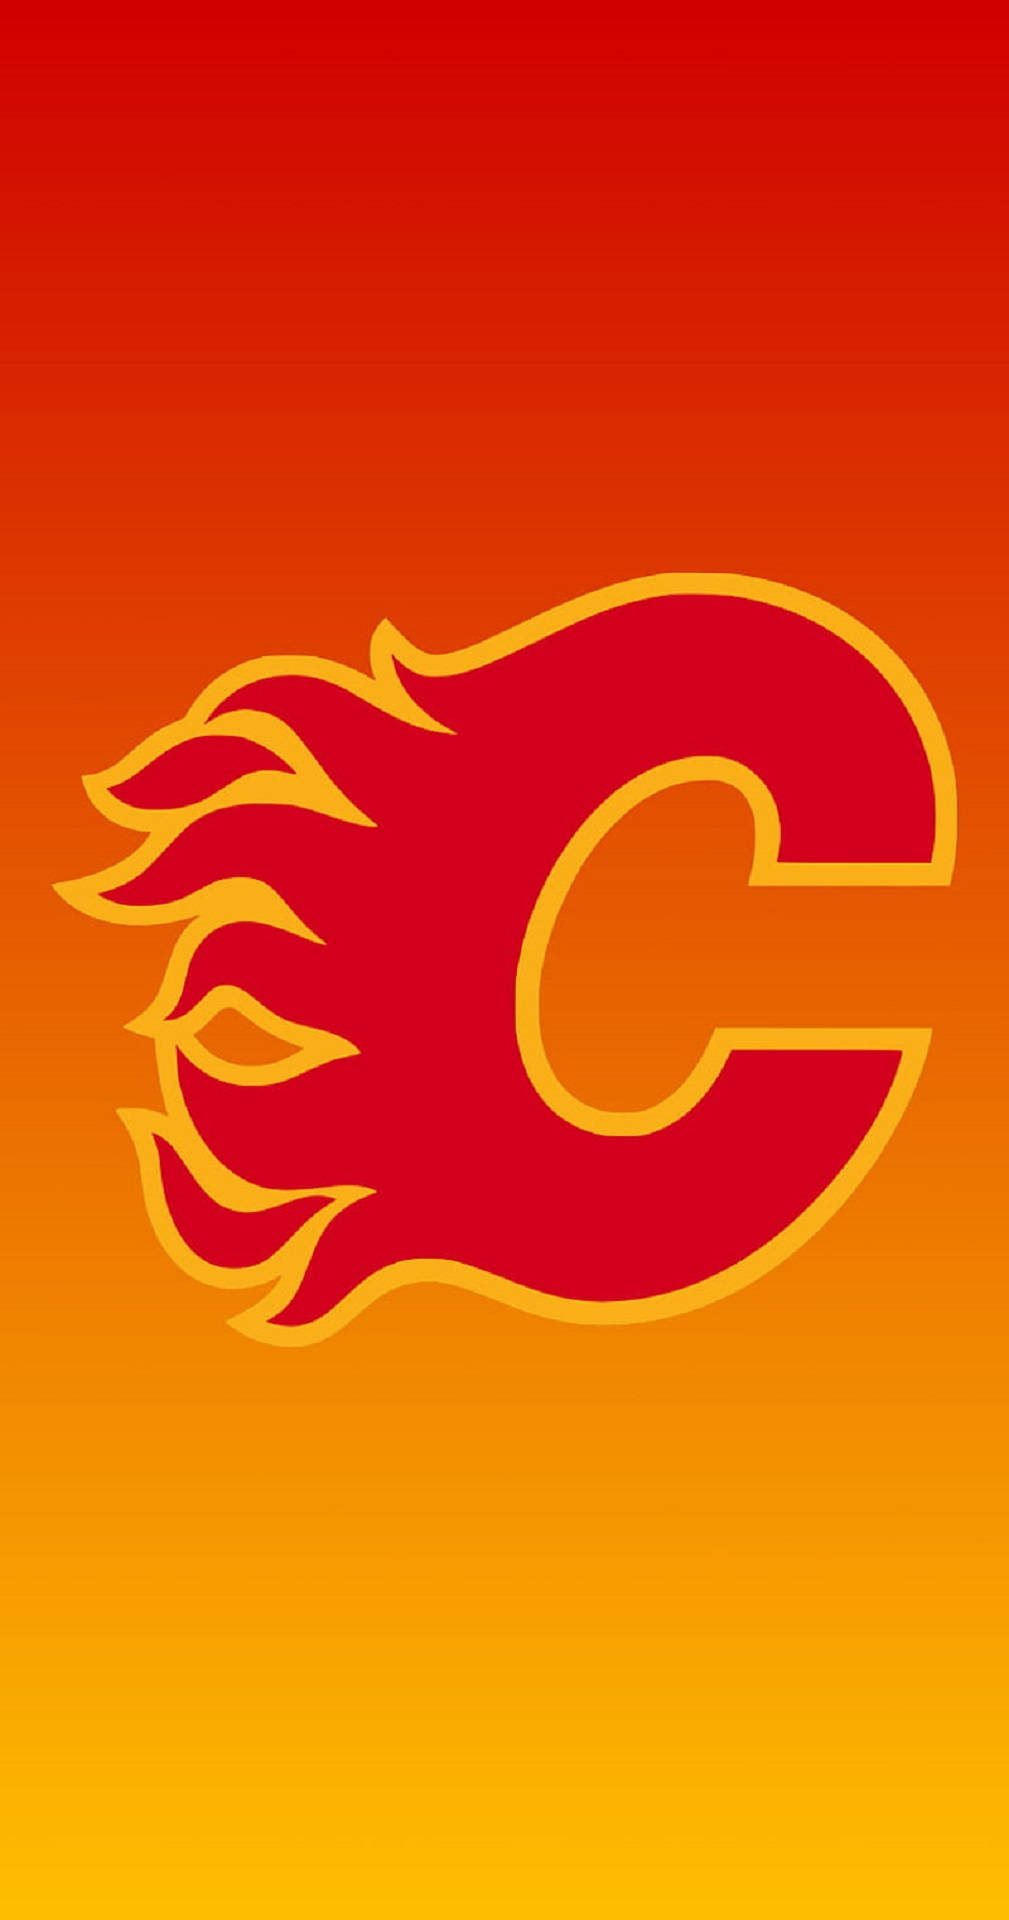 Calgary Flames Yellow Theme Logo Wallpaper